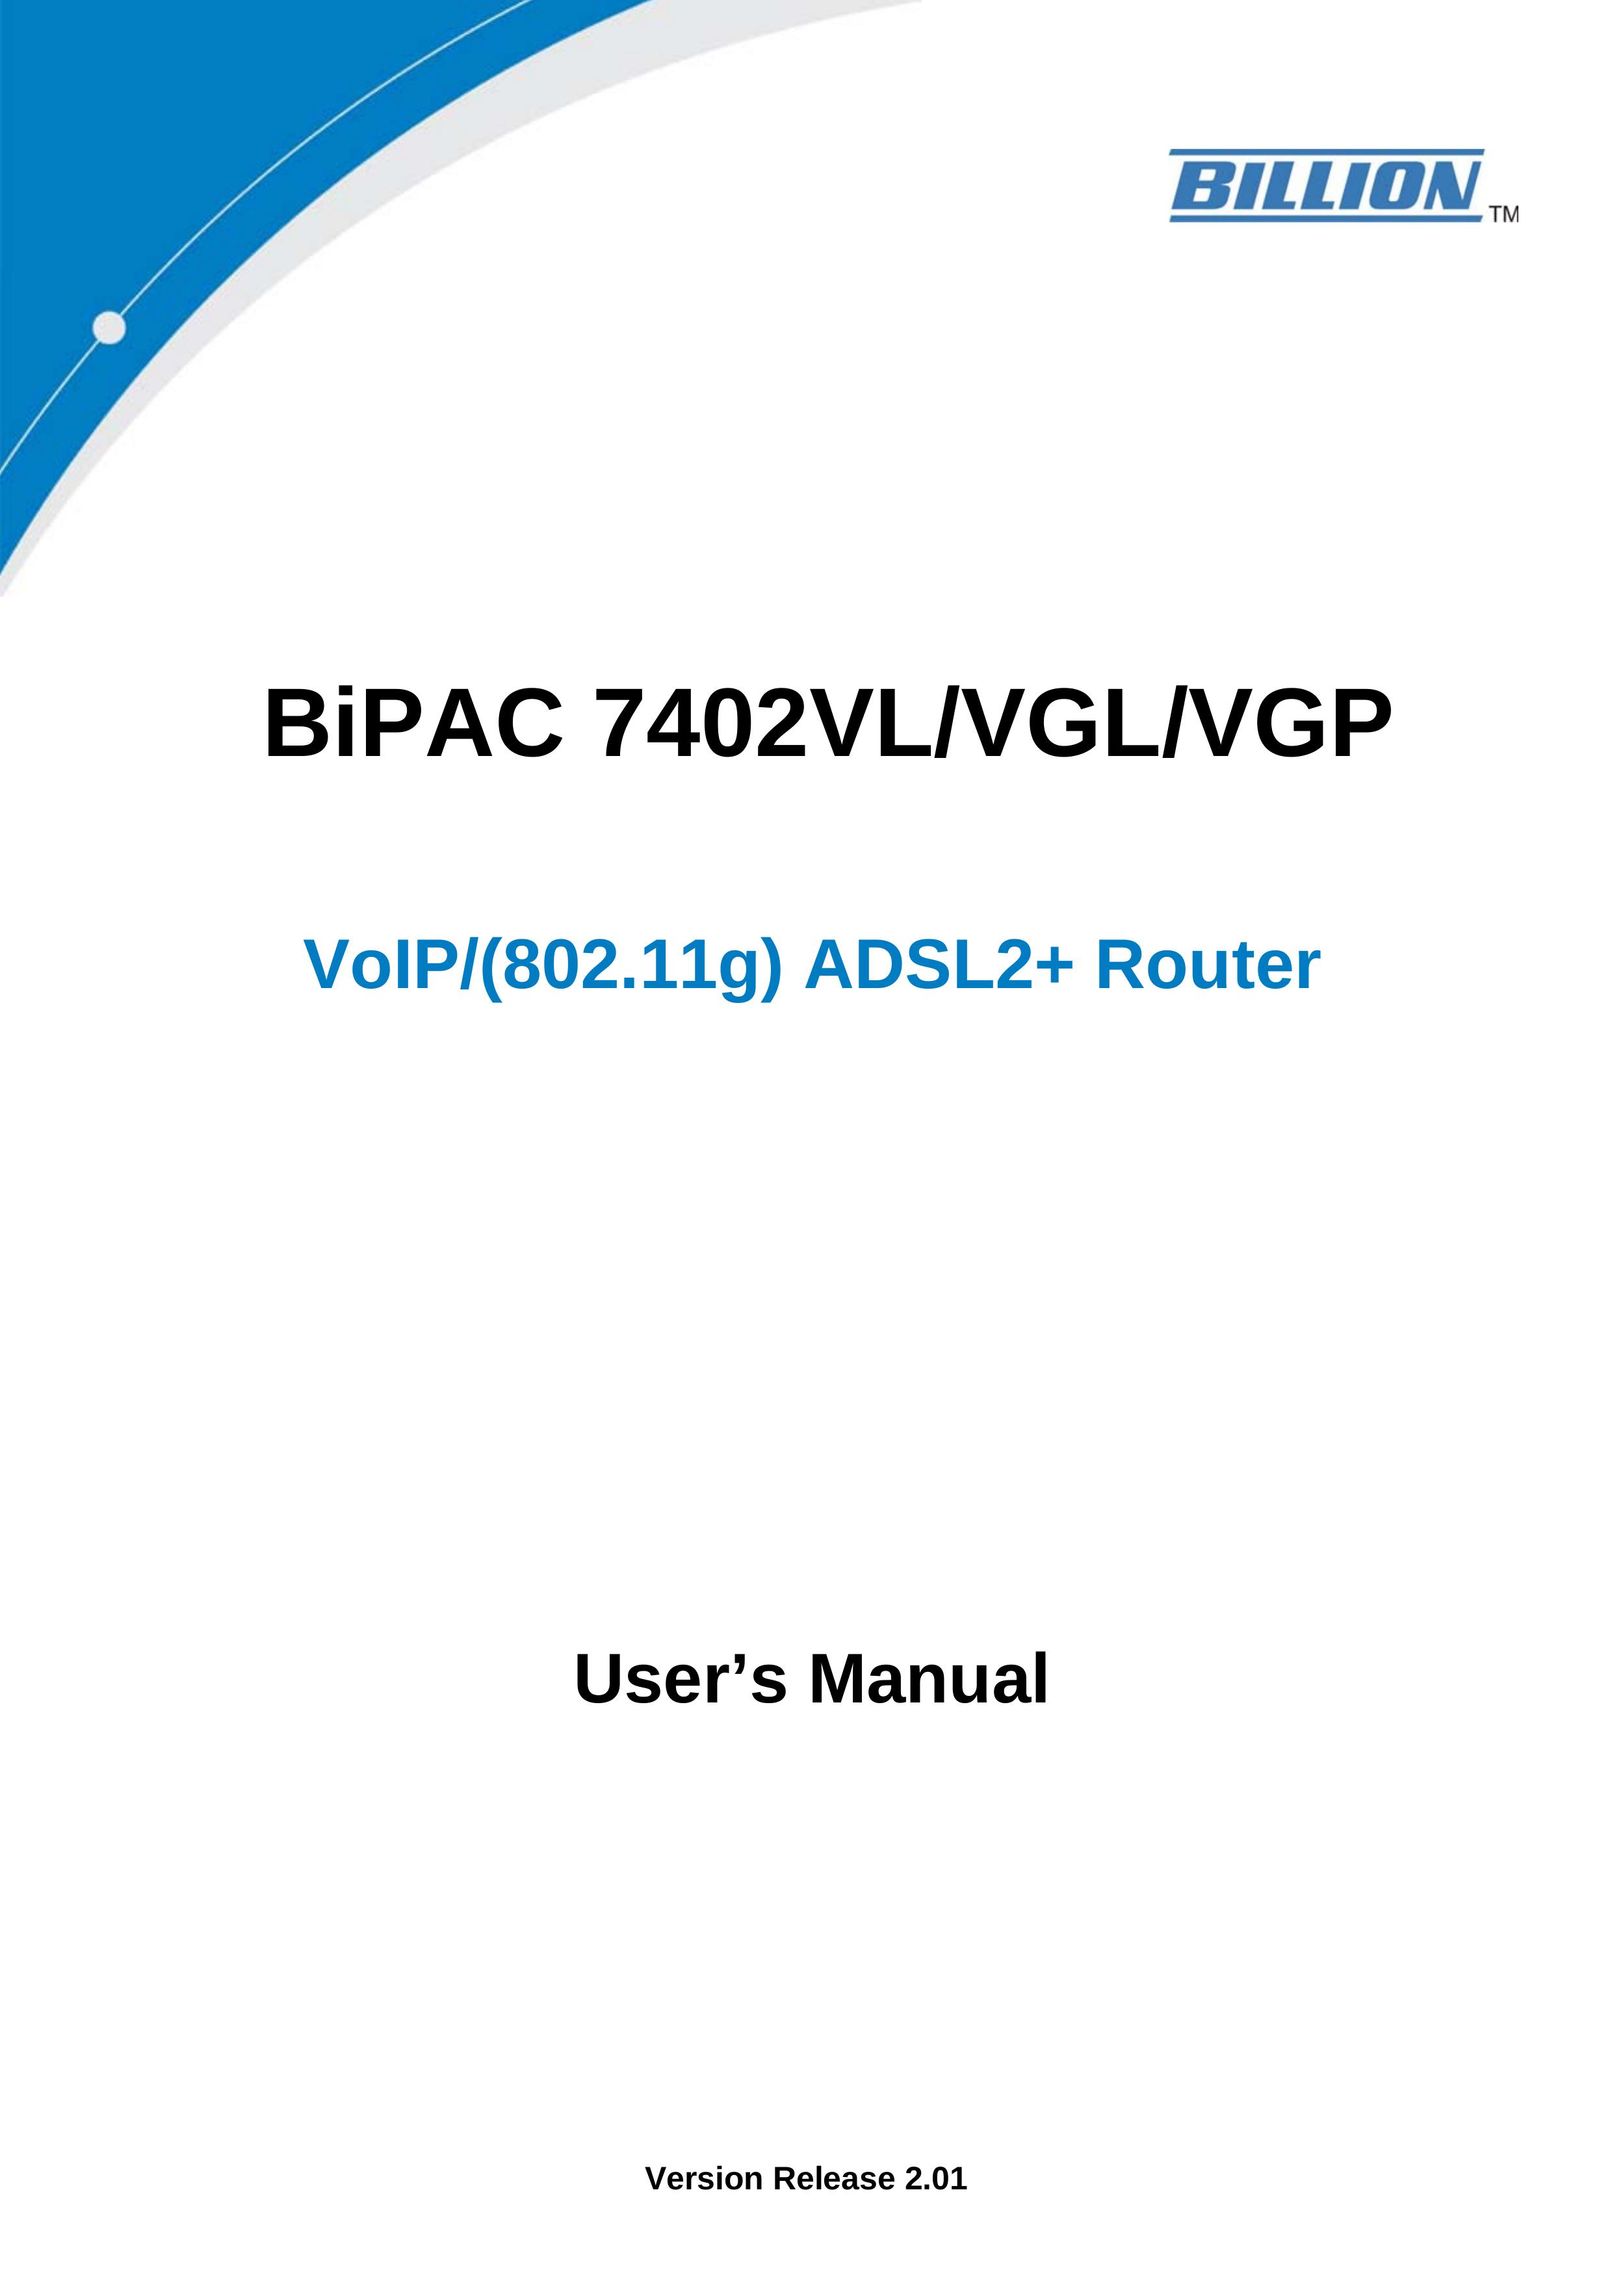 Billion Electric Company 7402VL Network Router User Manual